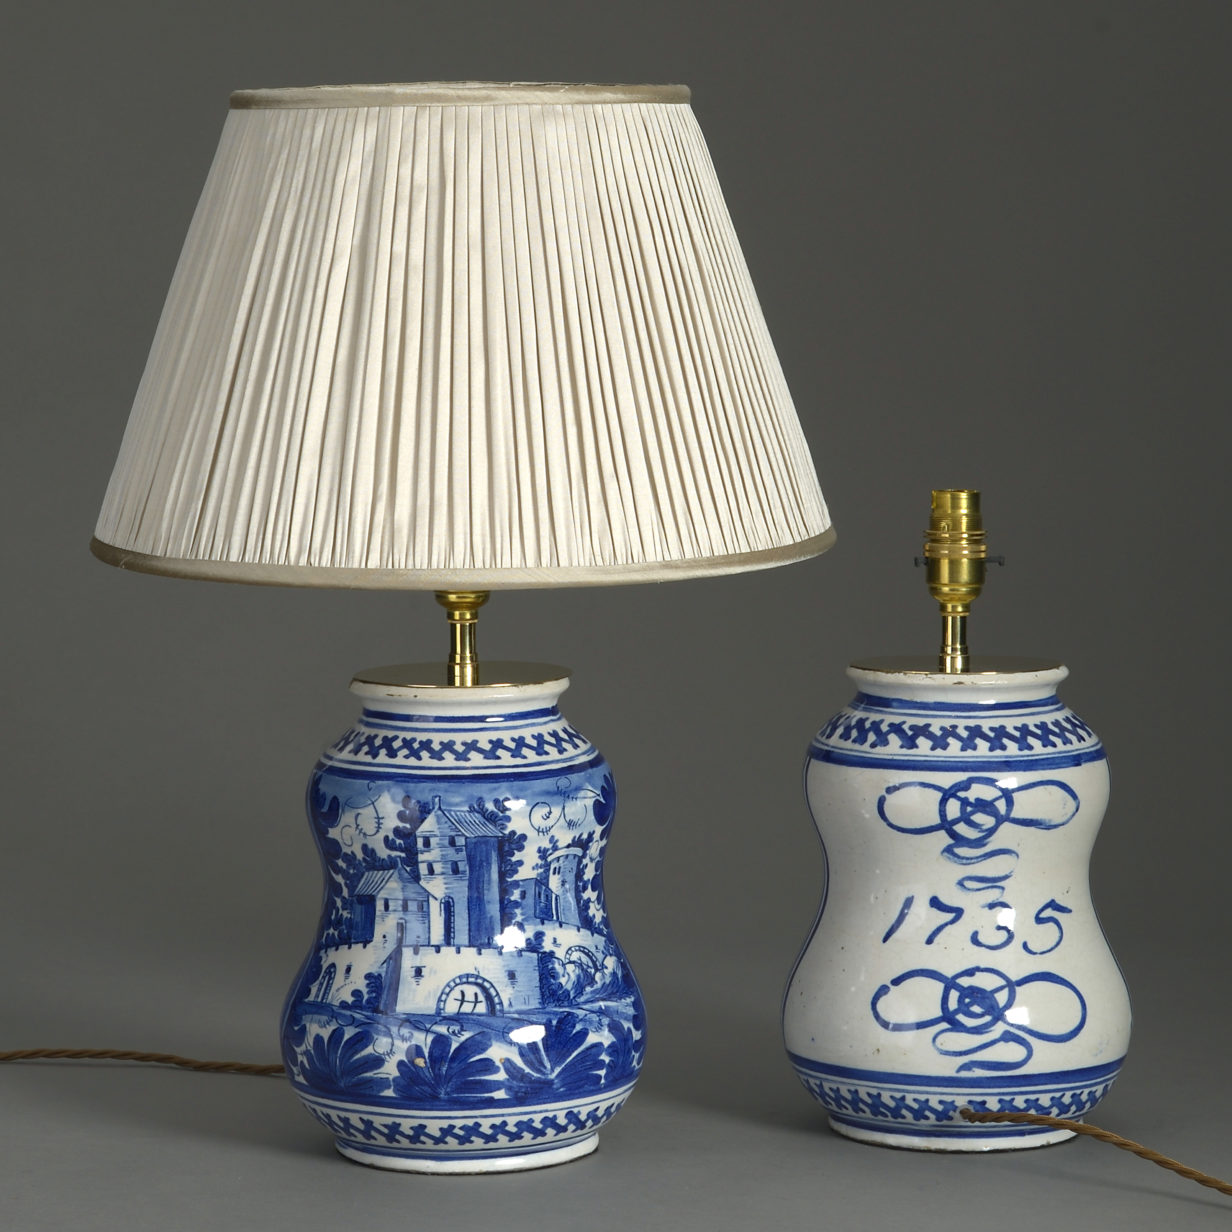 Pair of 19th century blue & white delft vase lamps